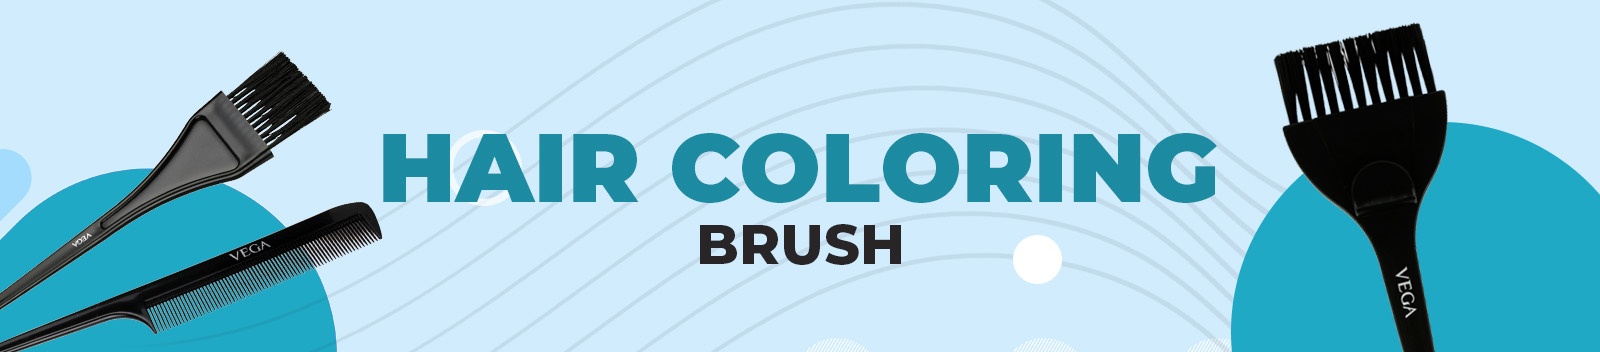 Dye Brush